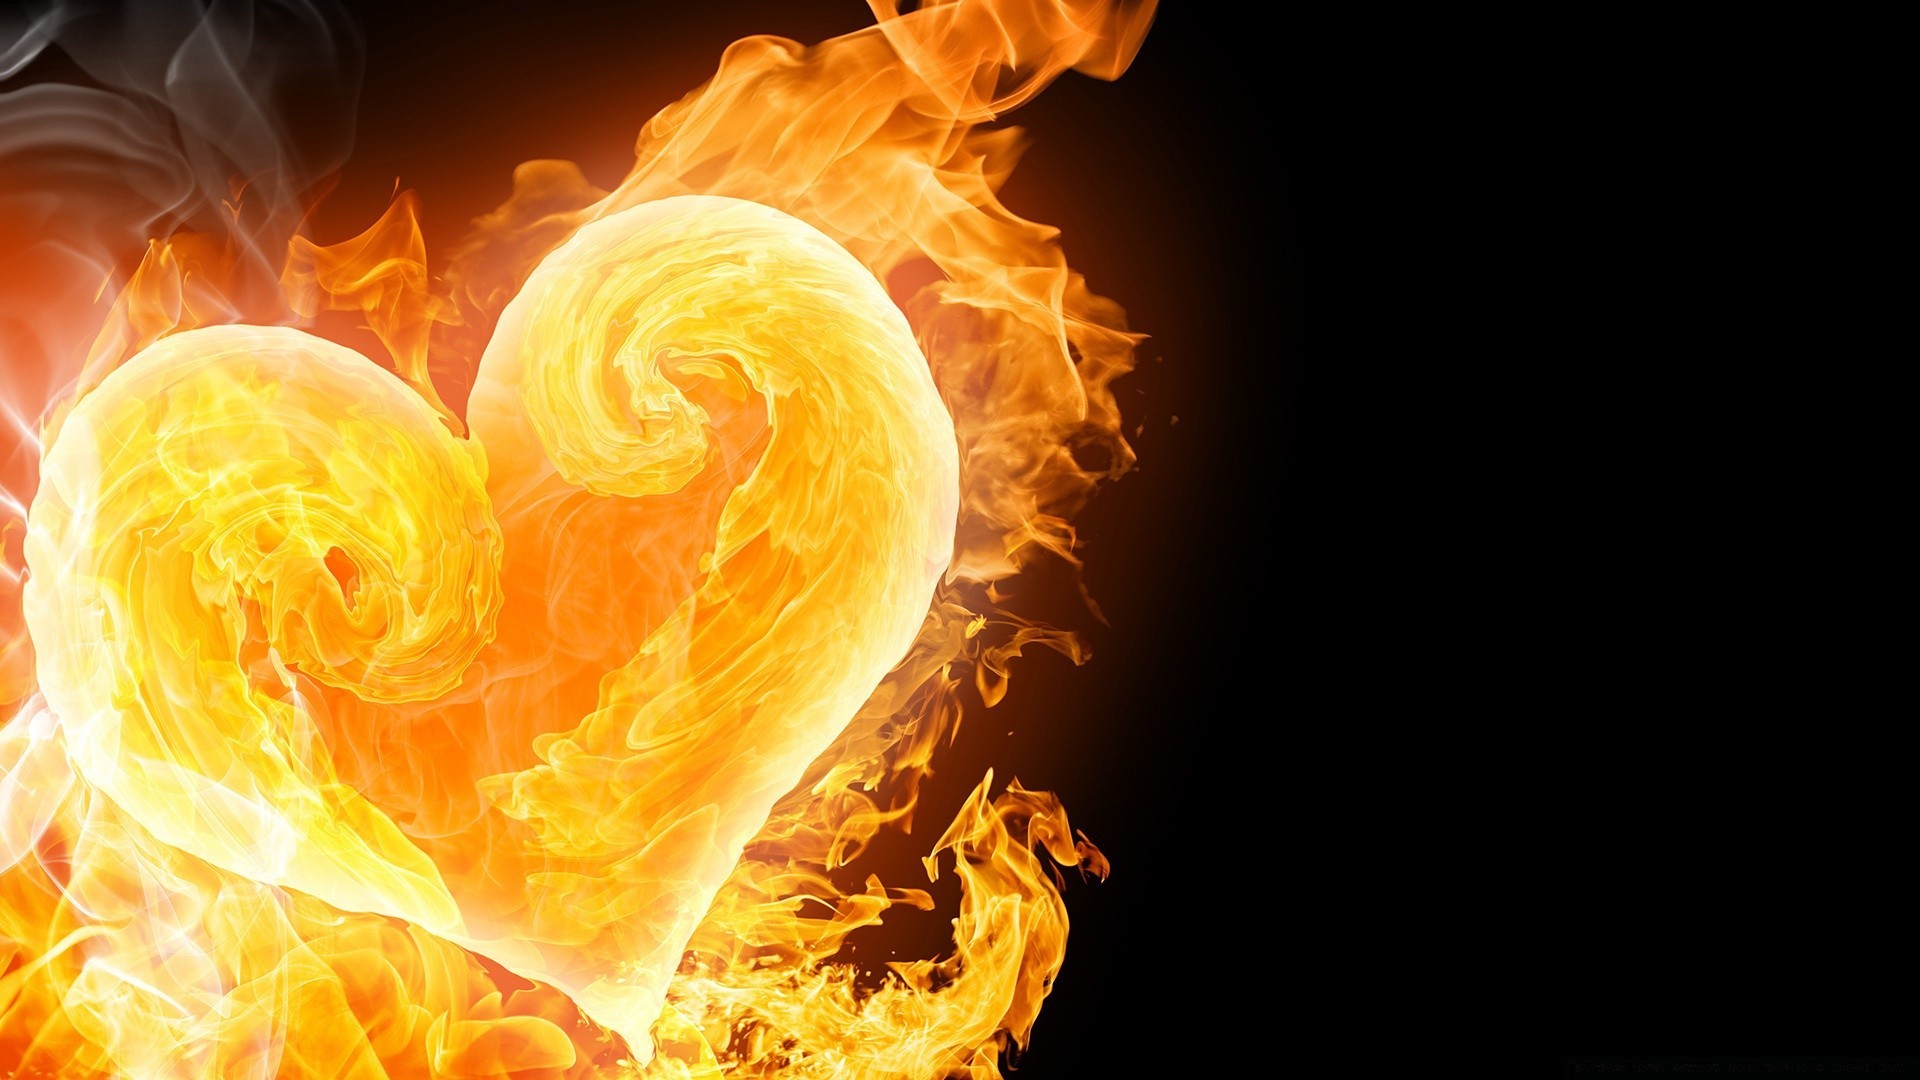 hearts flame hot smoke heat danger energy